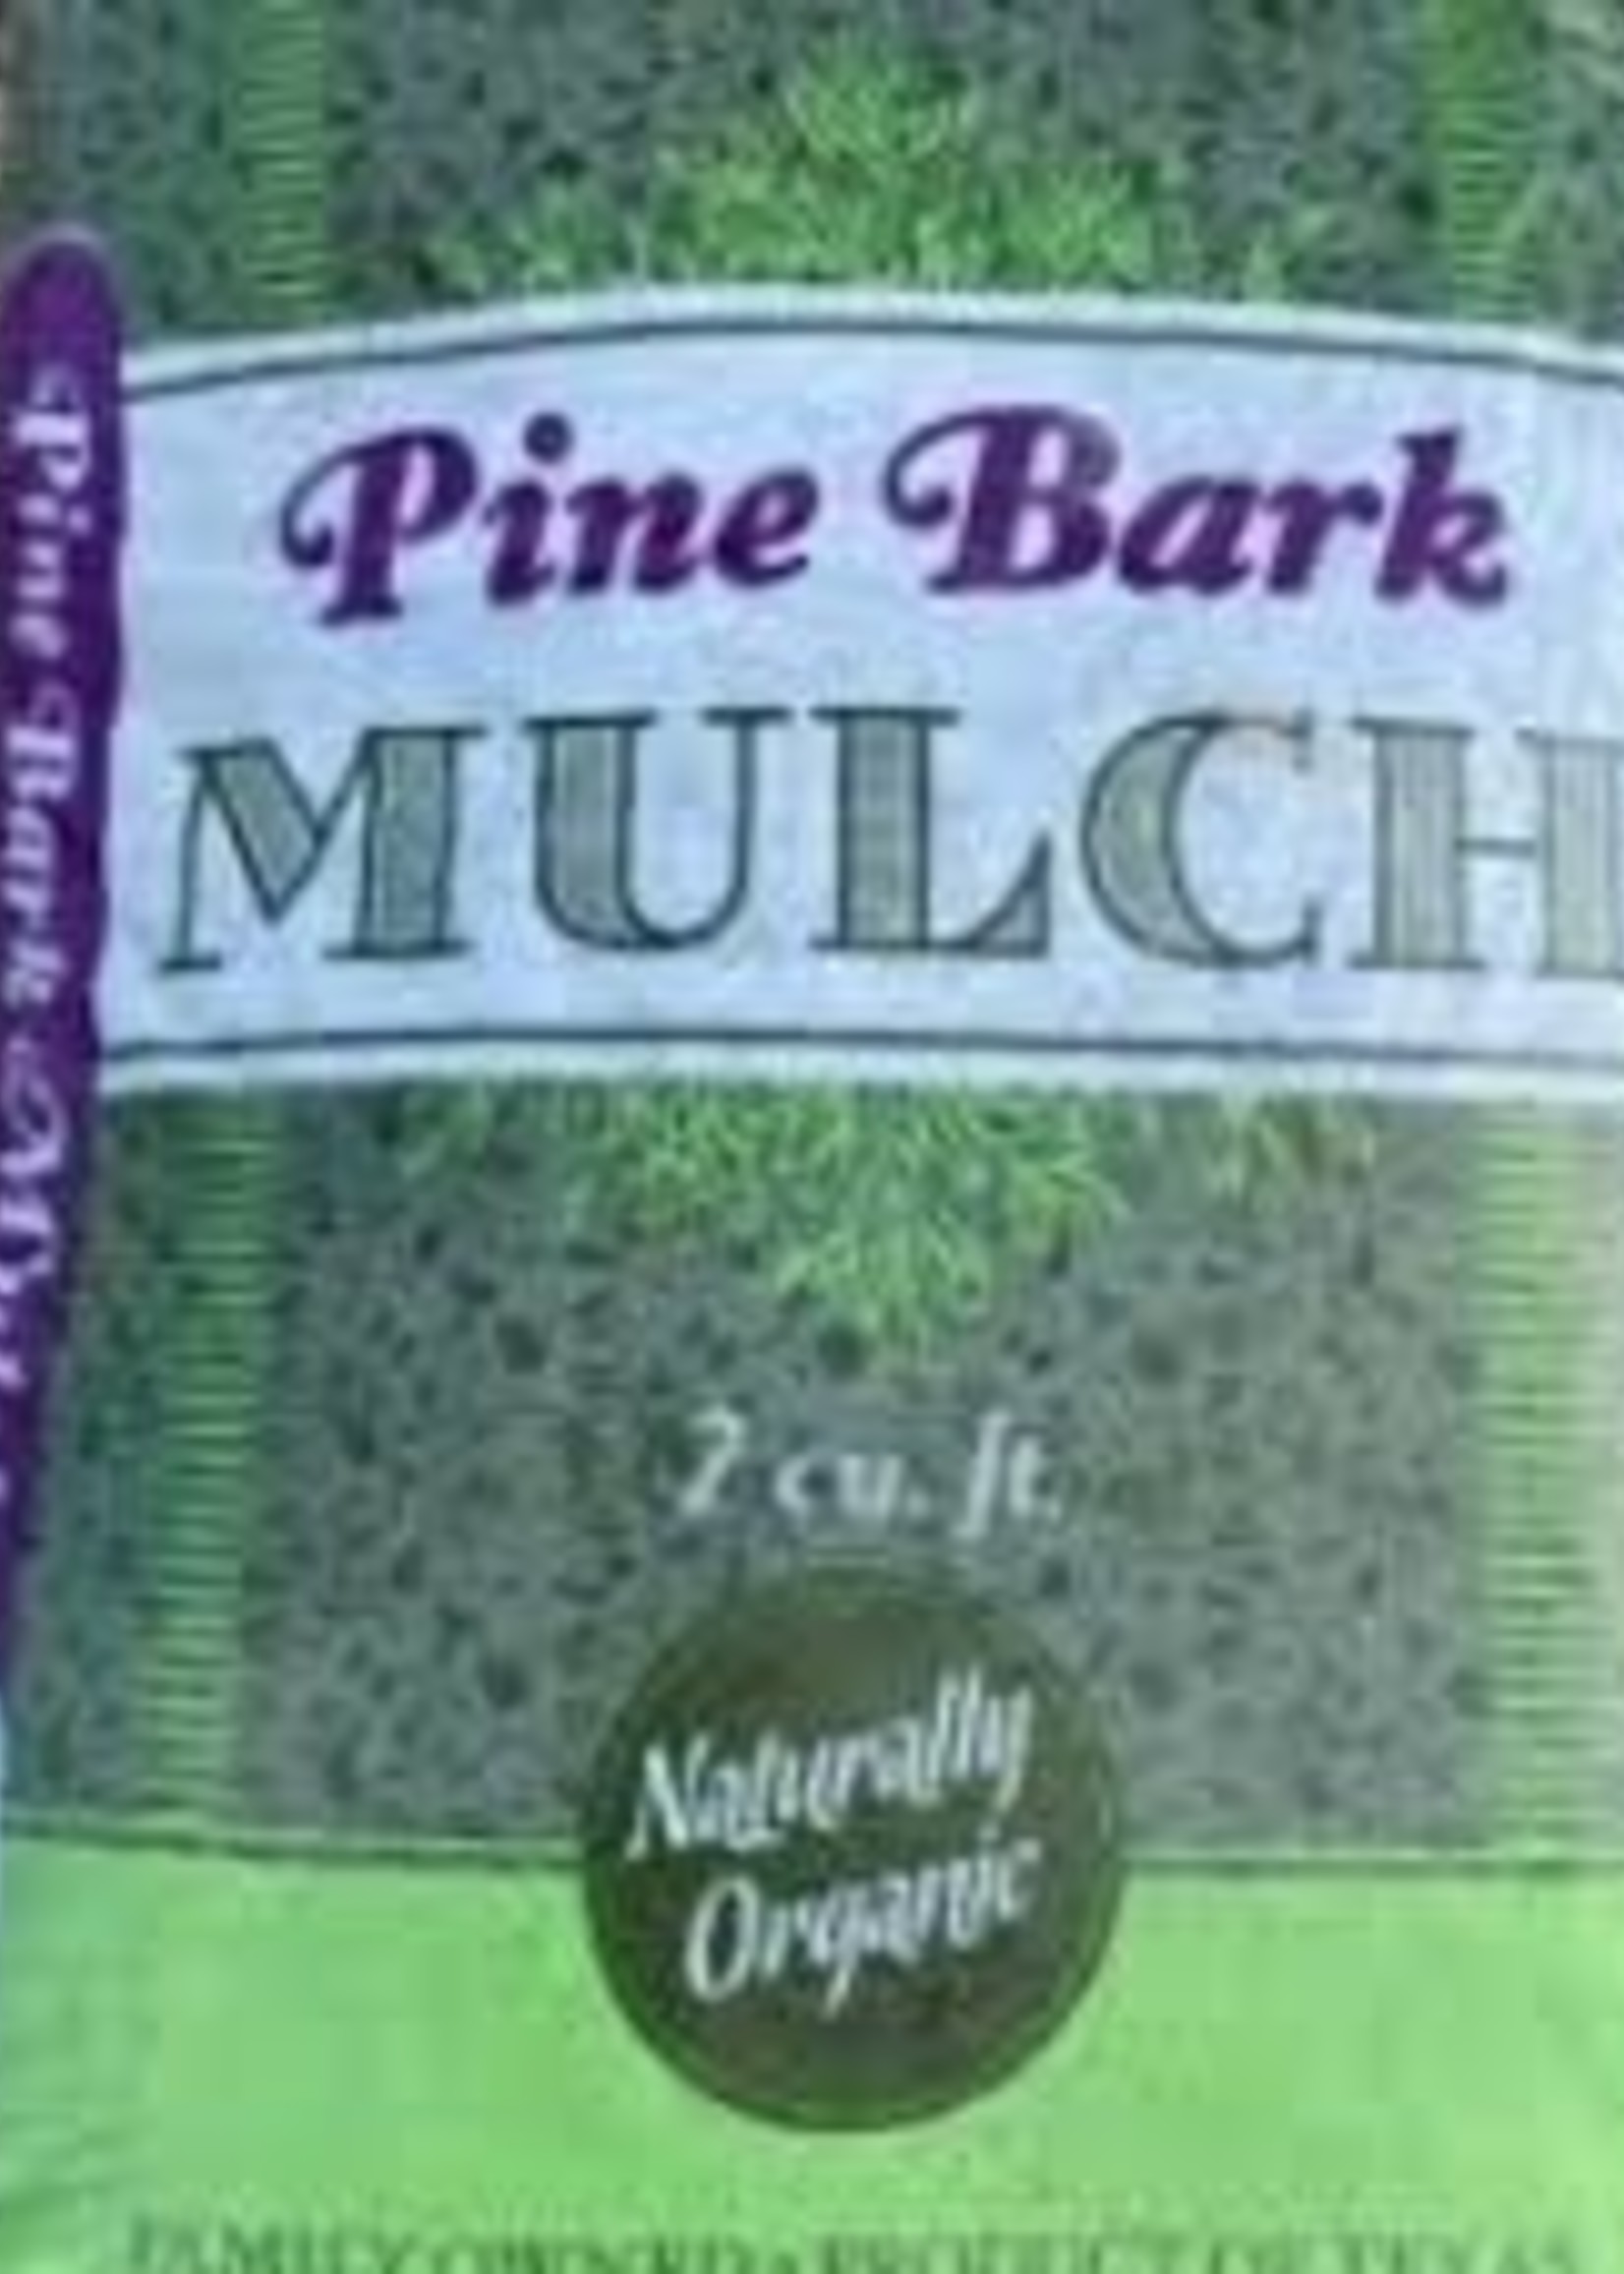 Pine bark Mulch 2 cf.